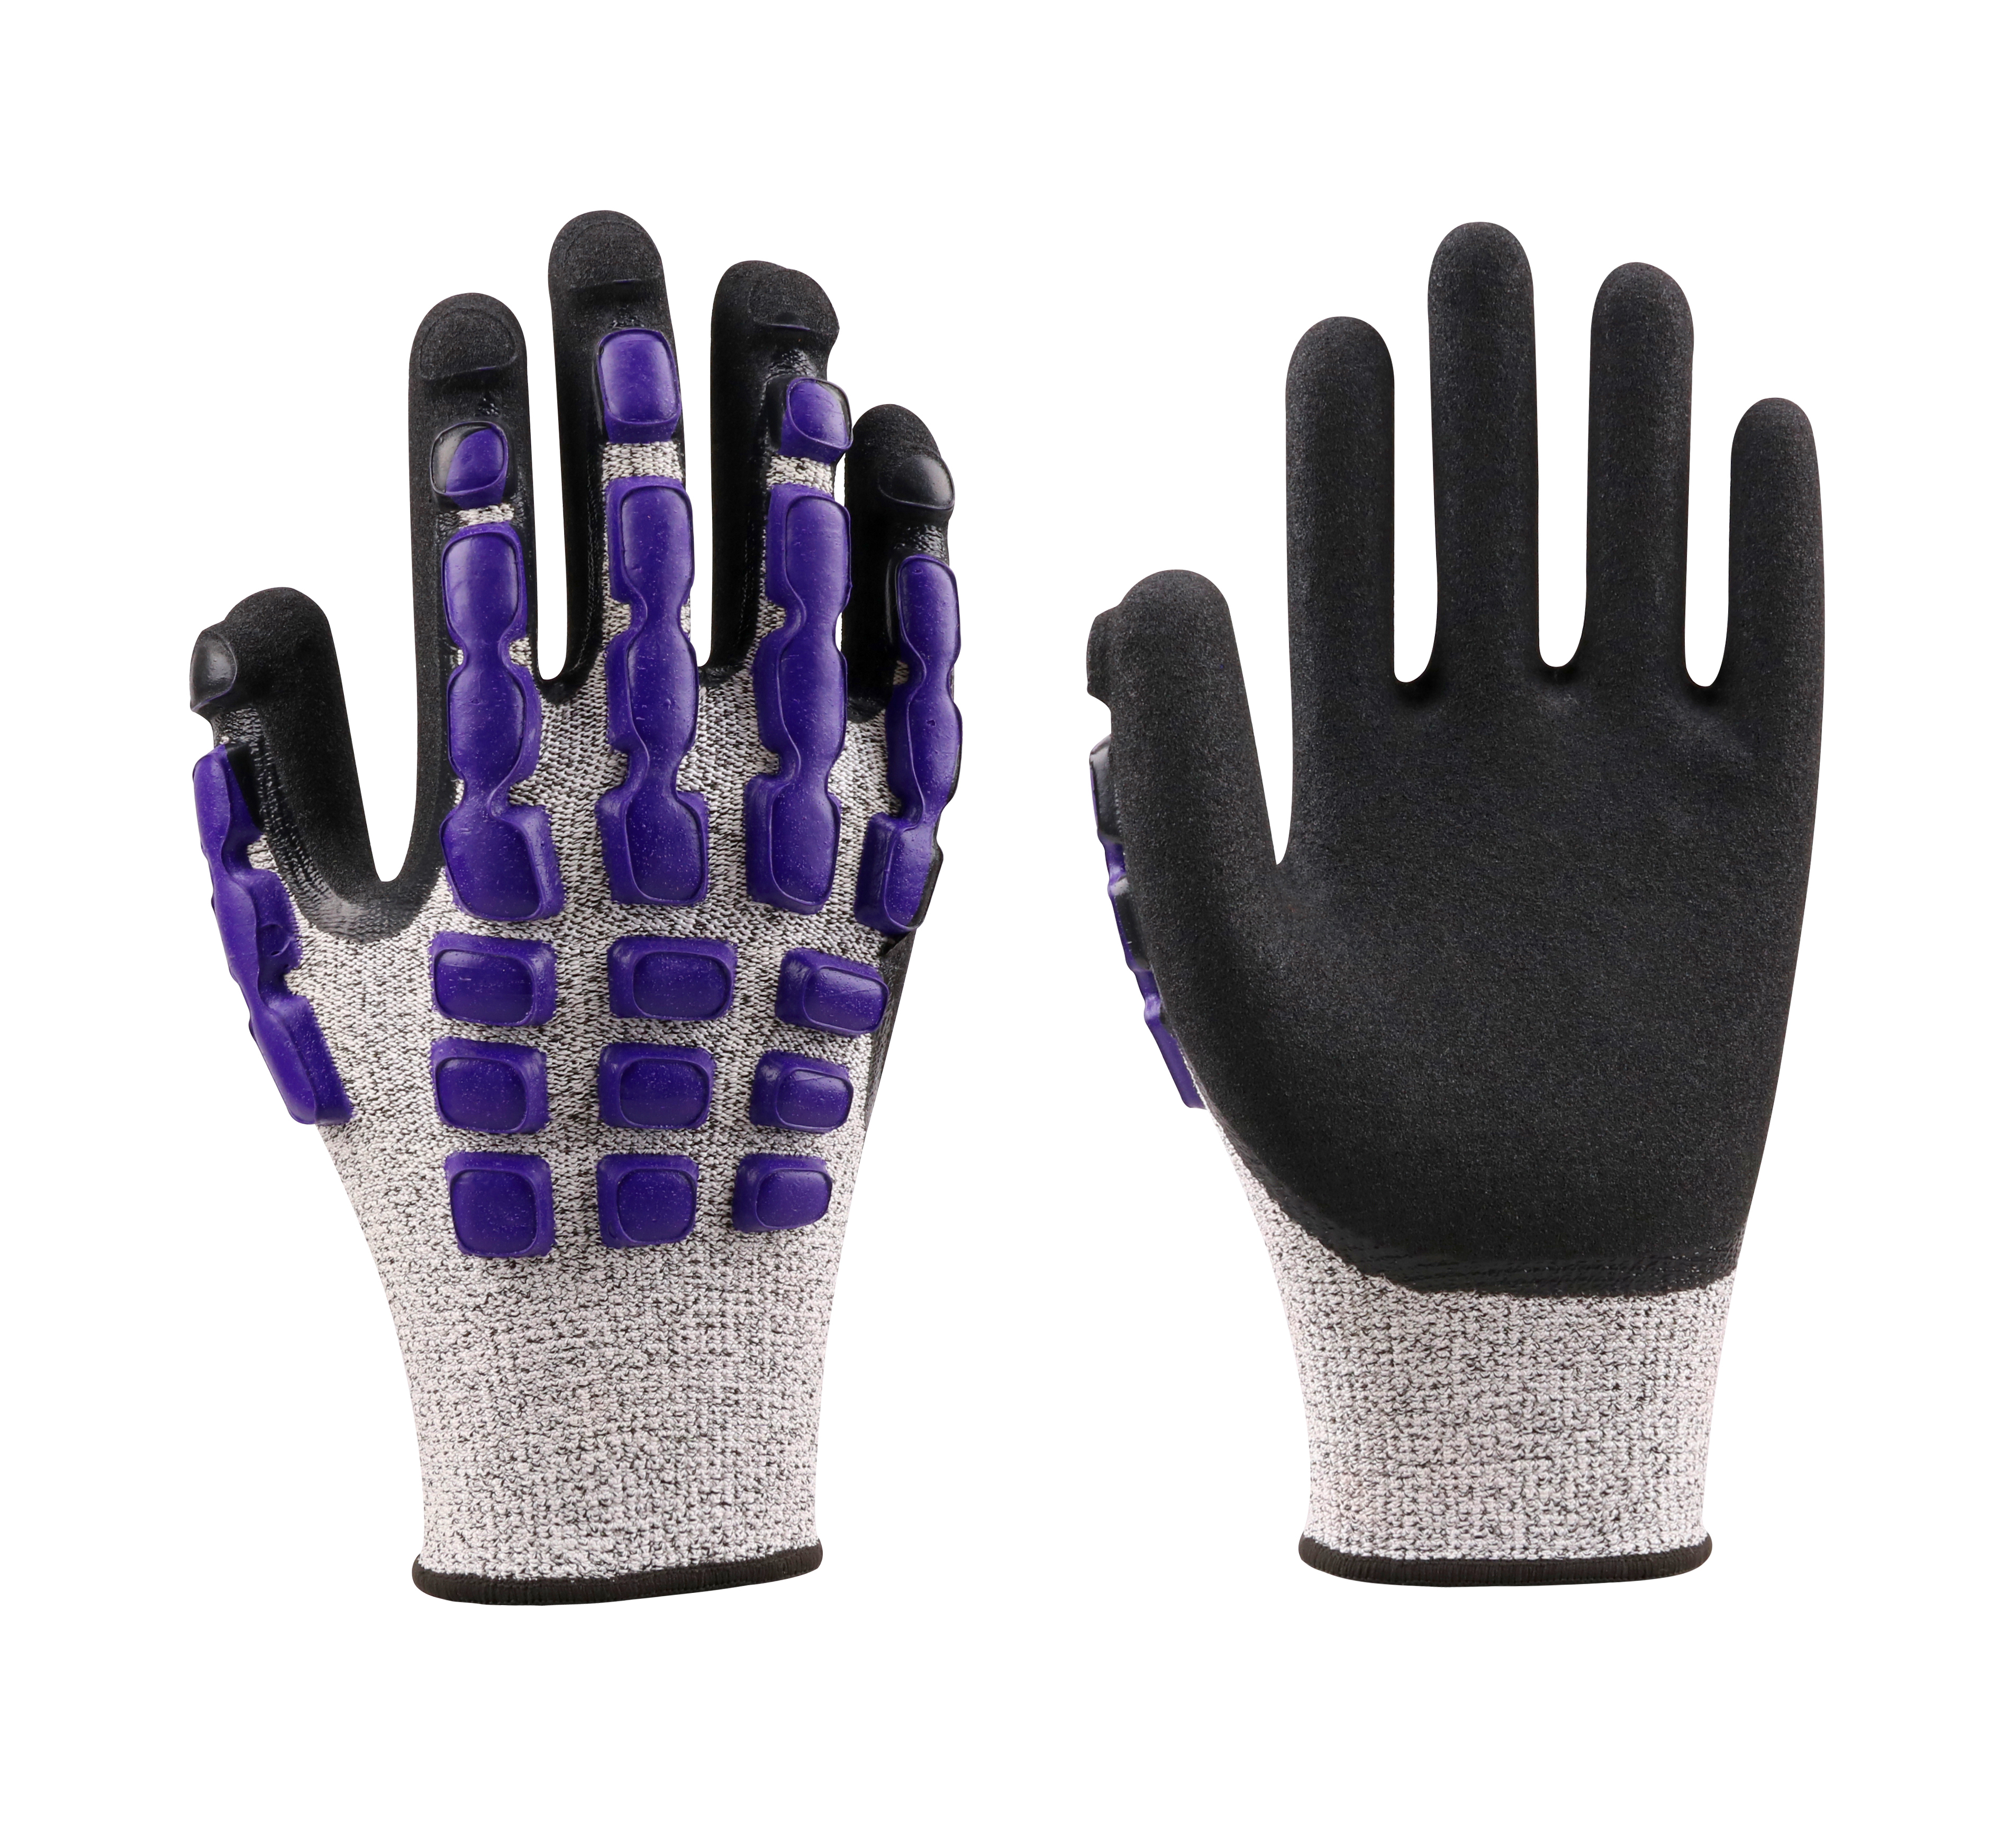  13 gauge HPPE Impact Resistant & Cut Resistant Gloves